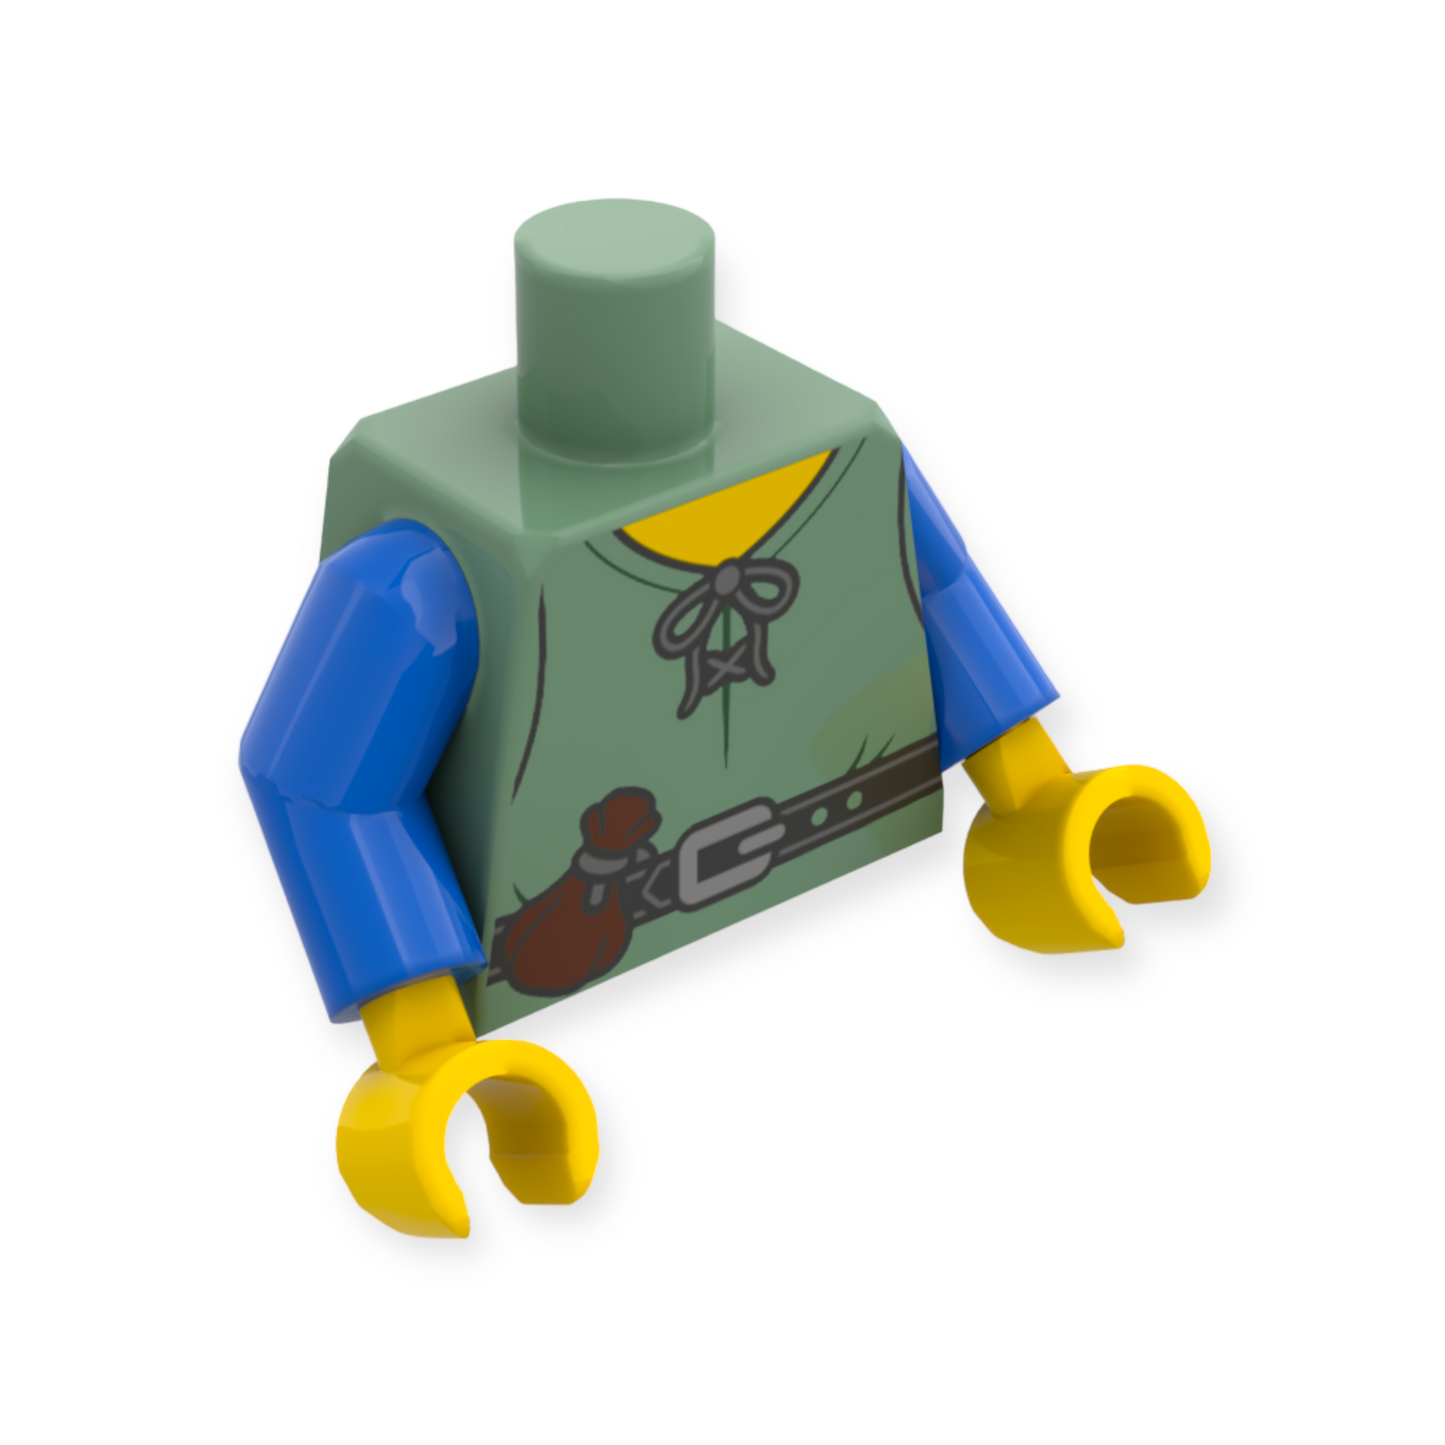 LEGO Torso - 6229 Laced Shirt Yellow Neck Black Belt Silver Buckle